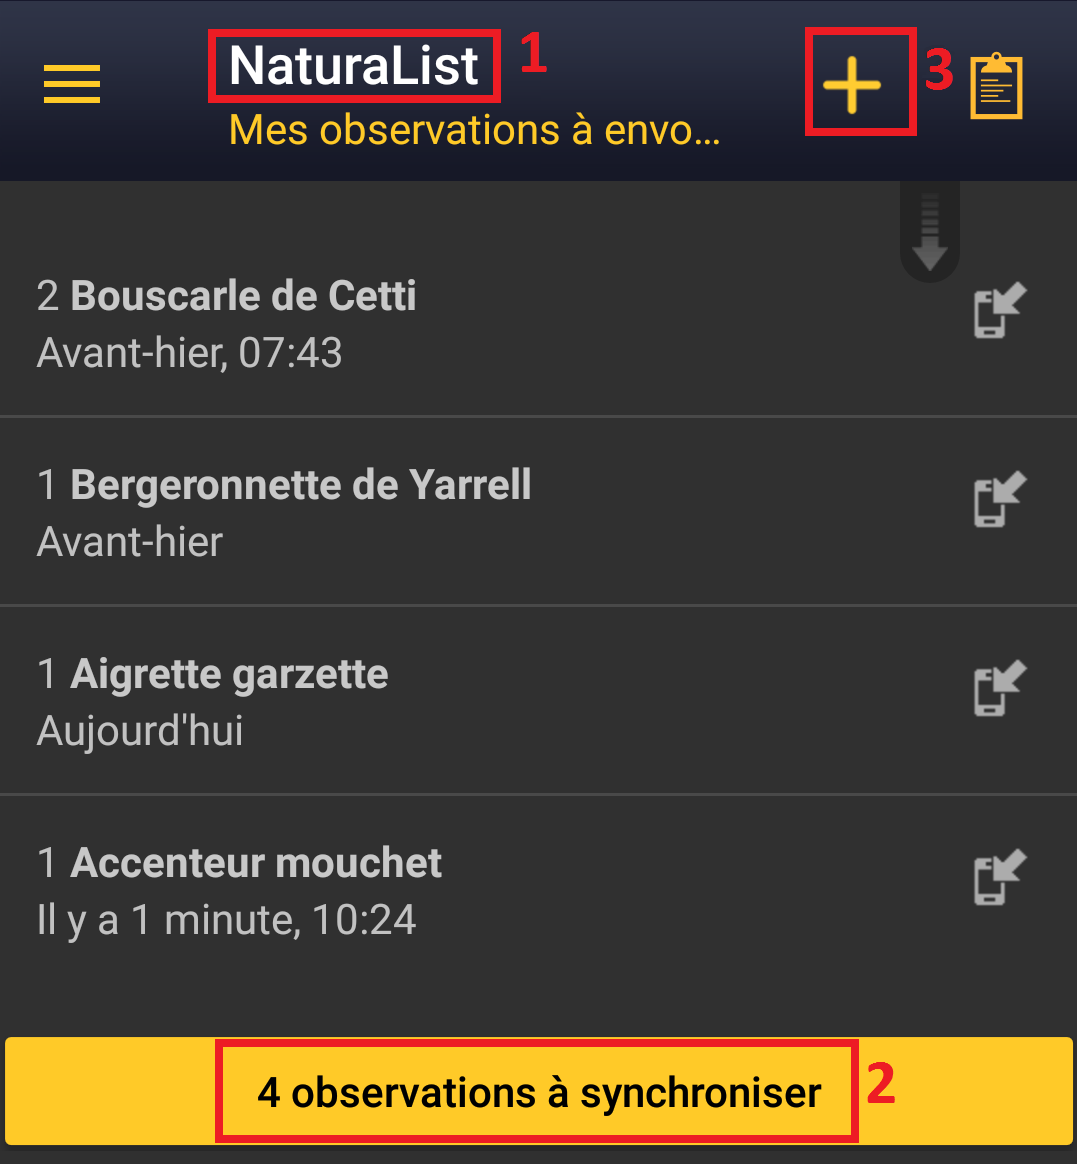 https://cdnfiles2.biolovision.net/www.faune-france.org/userfiles/ListeNaturaList/PointNaturalist/10-synchroniser-obs.png